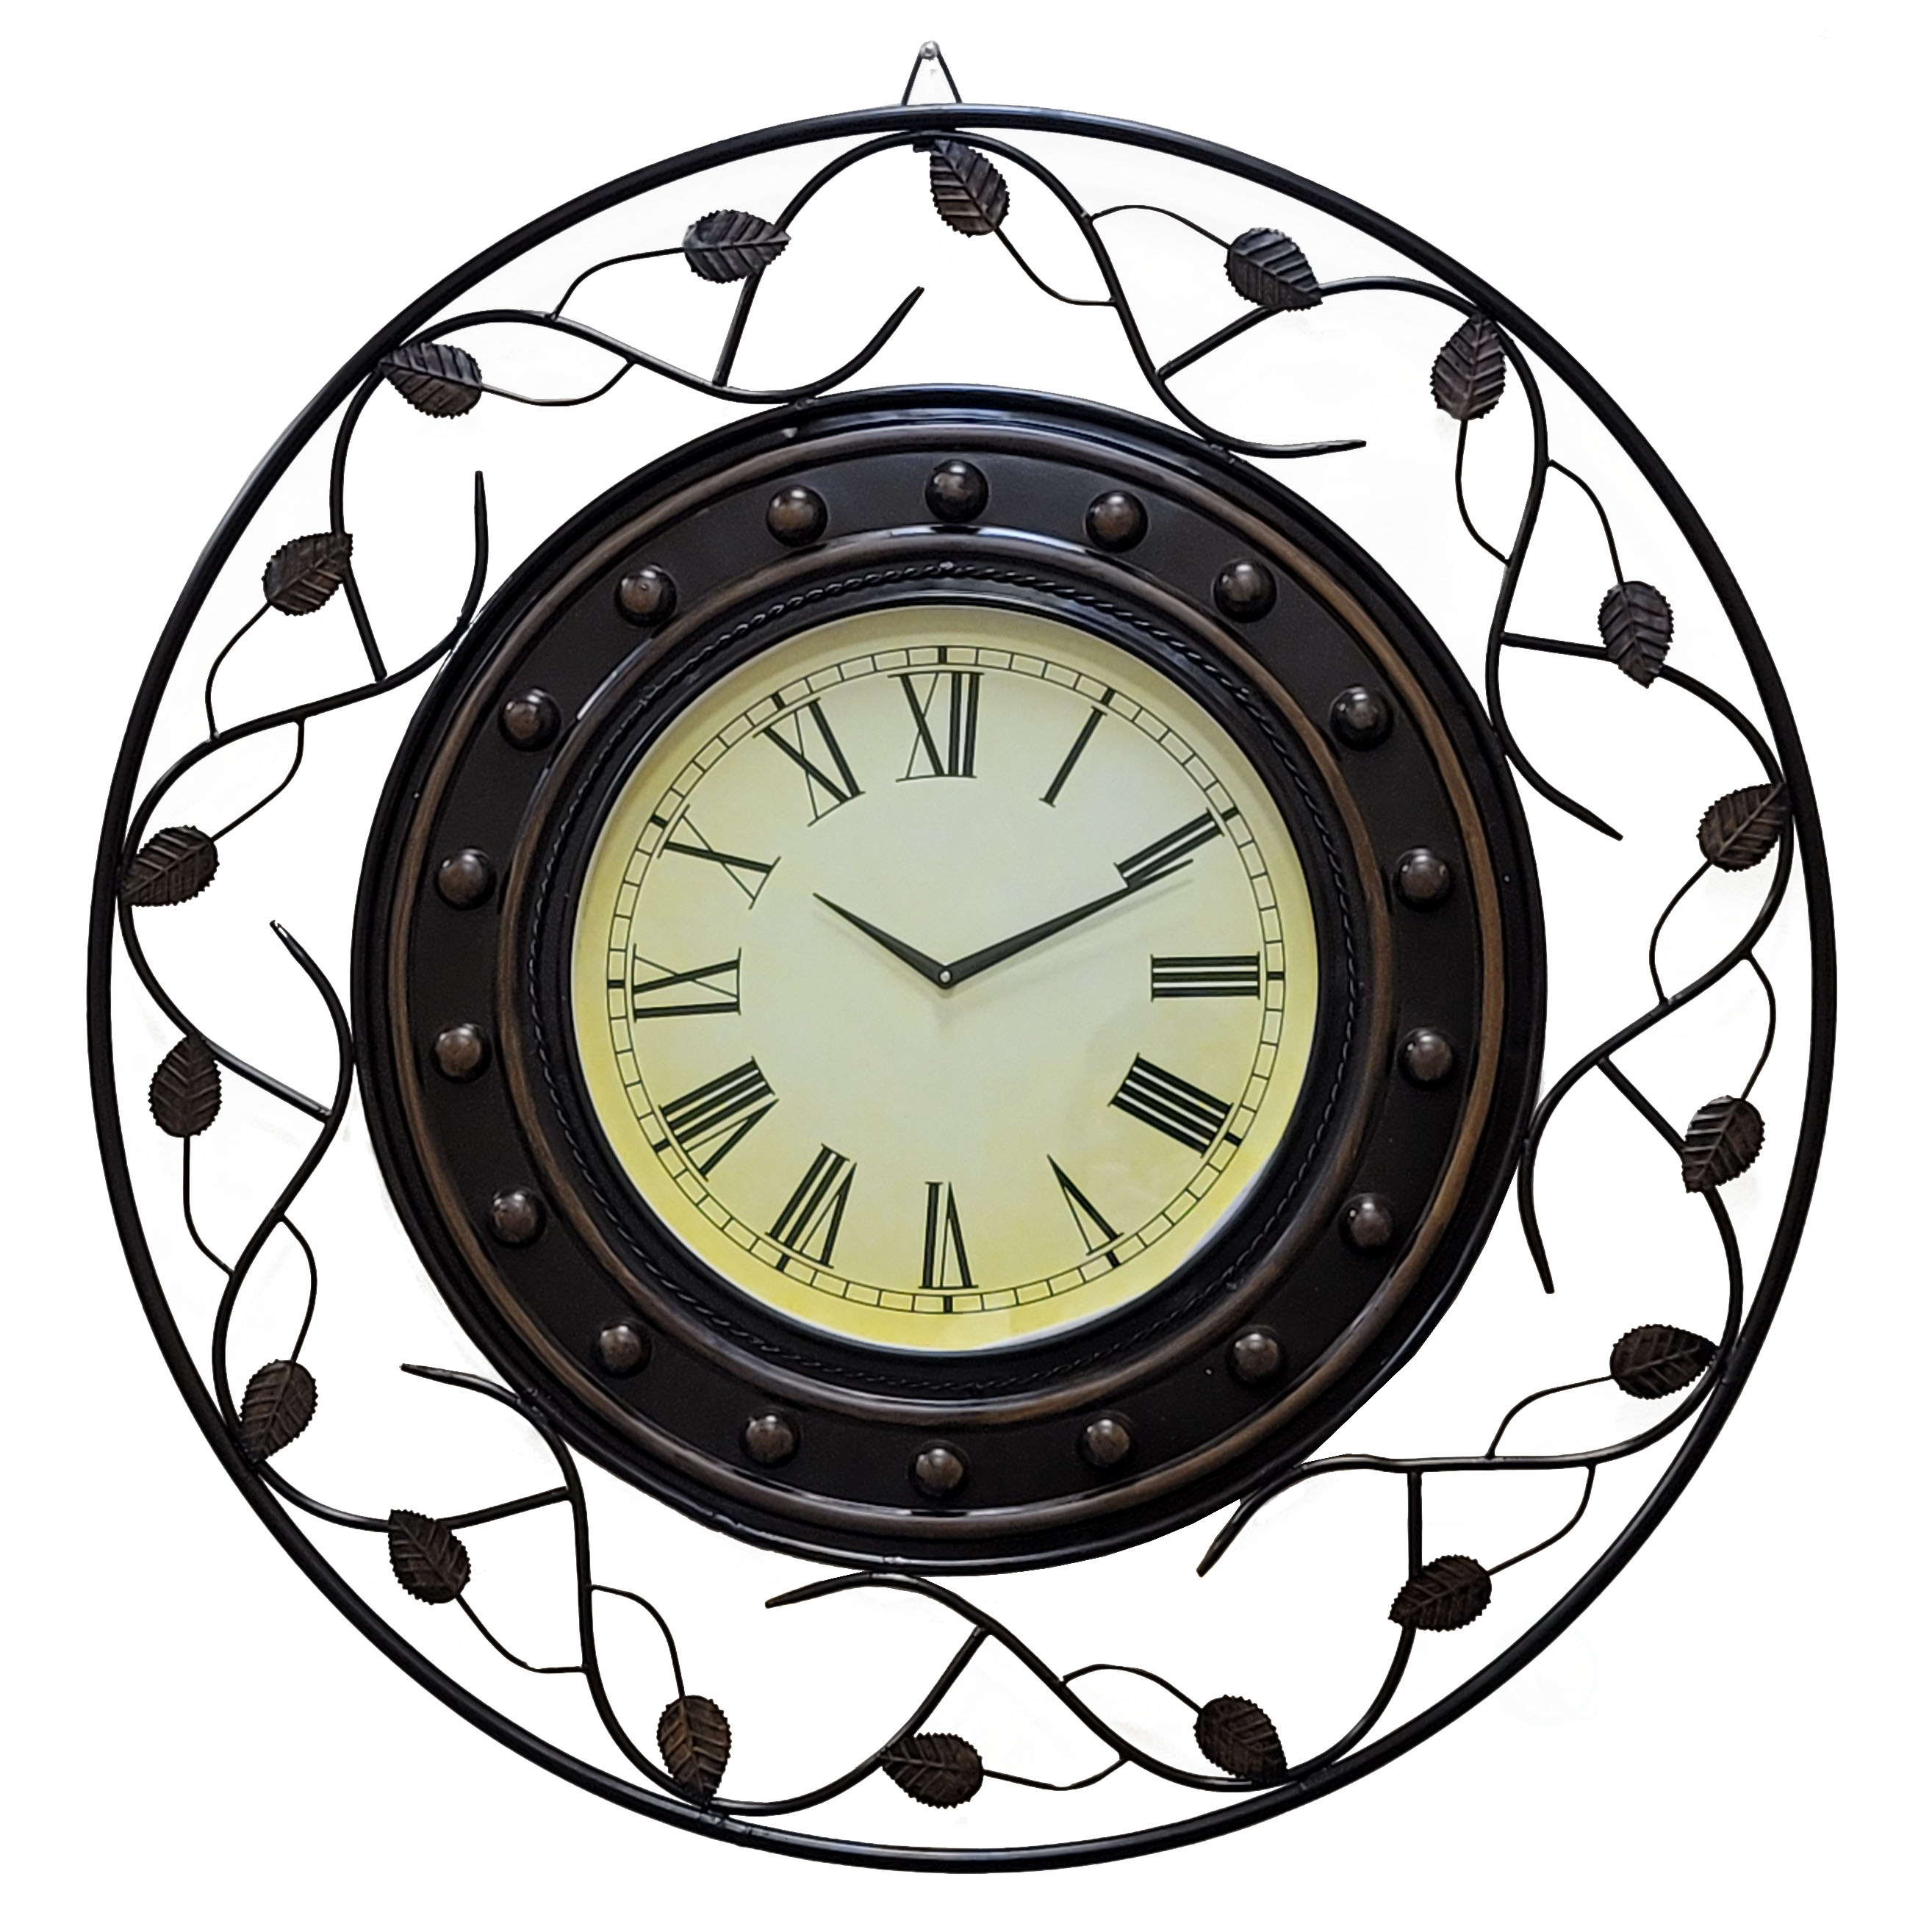 Decorative Vintage Roman Numerical Wall Clock with Black Metal Leaf Design Frame